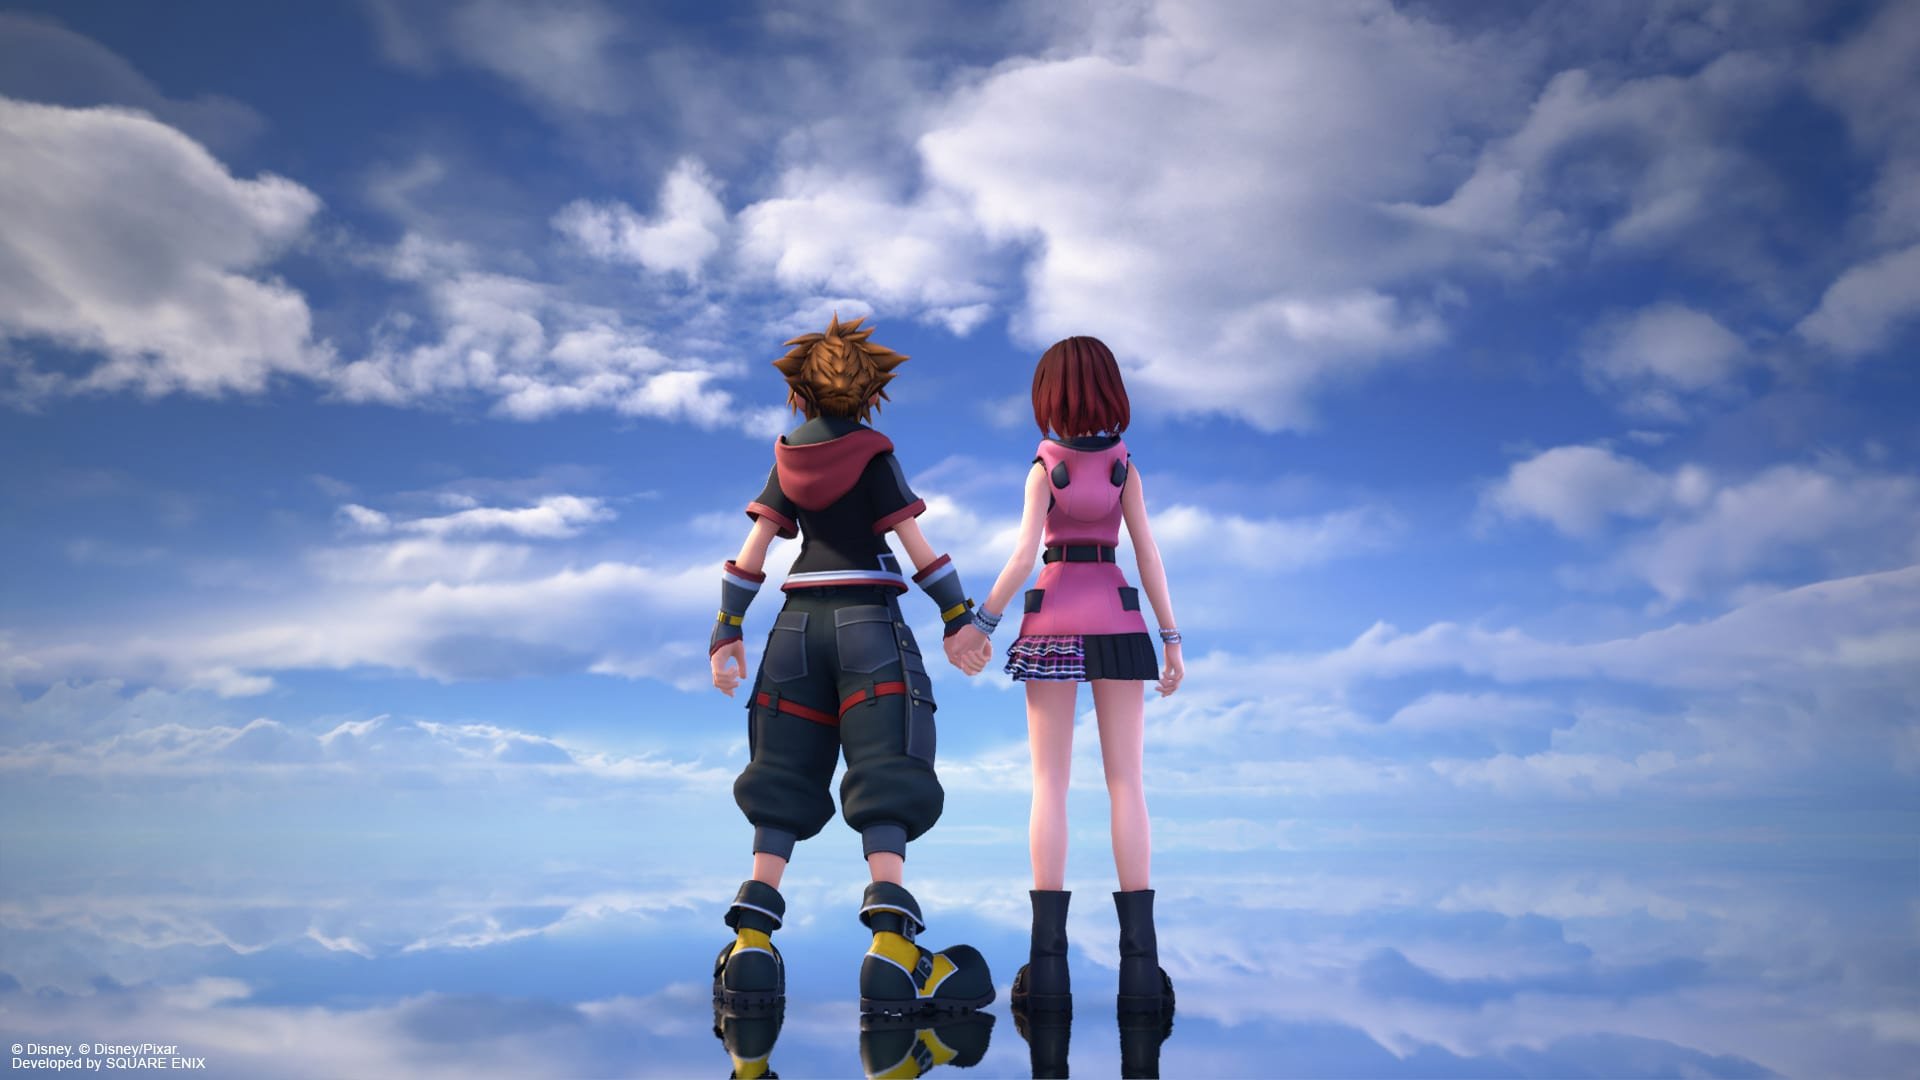 Kingdom Hearts 3 [PS4 PRO] Gameplay Walkthrough Part 5 - Kingdom